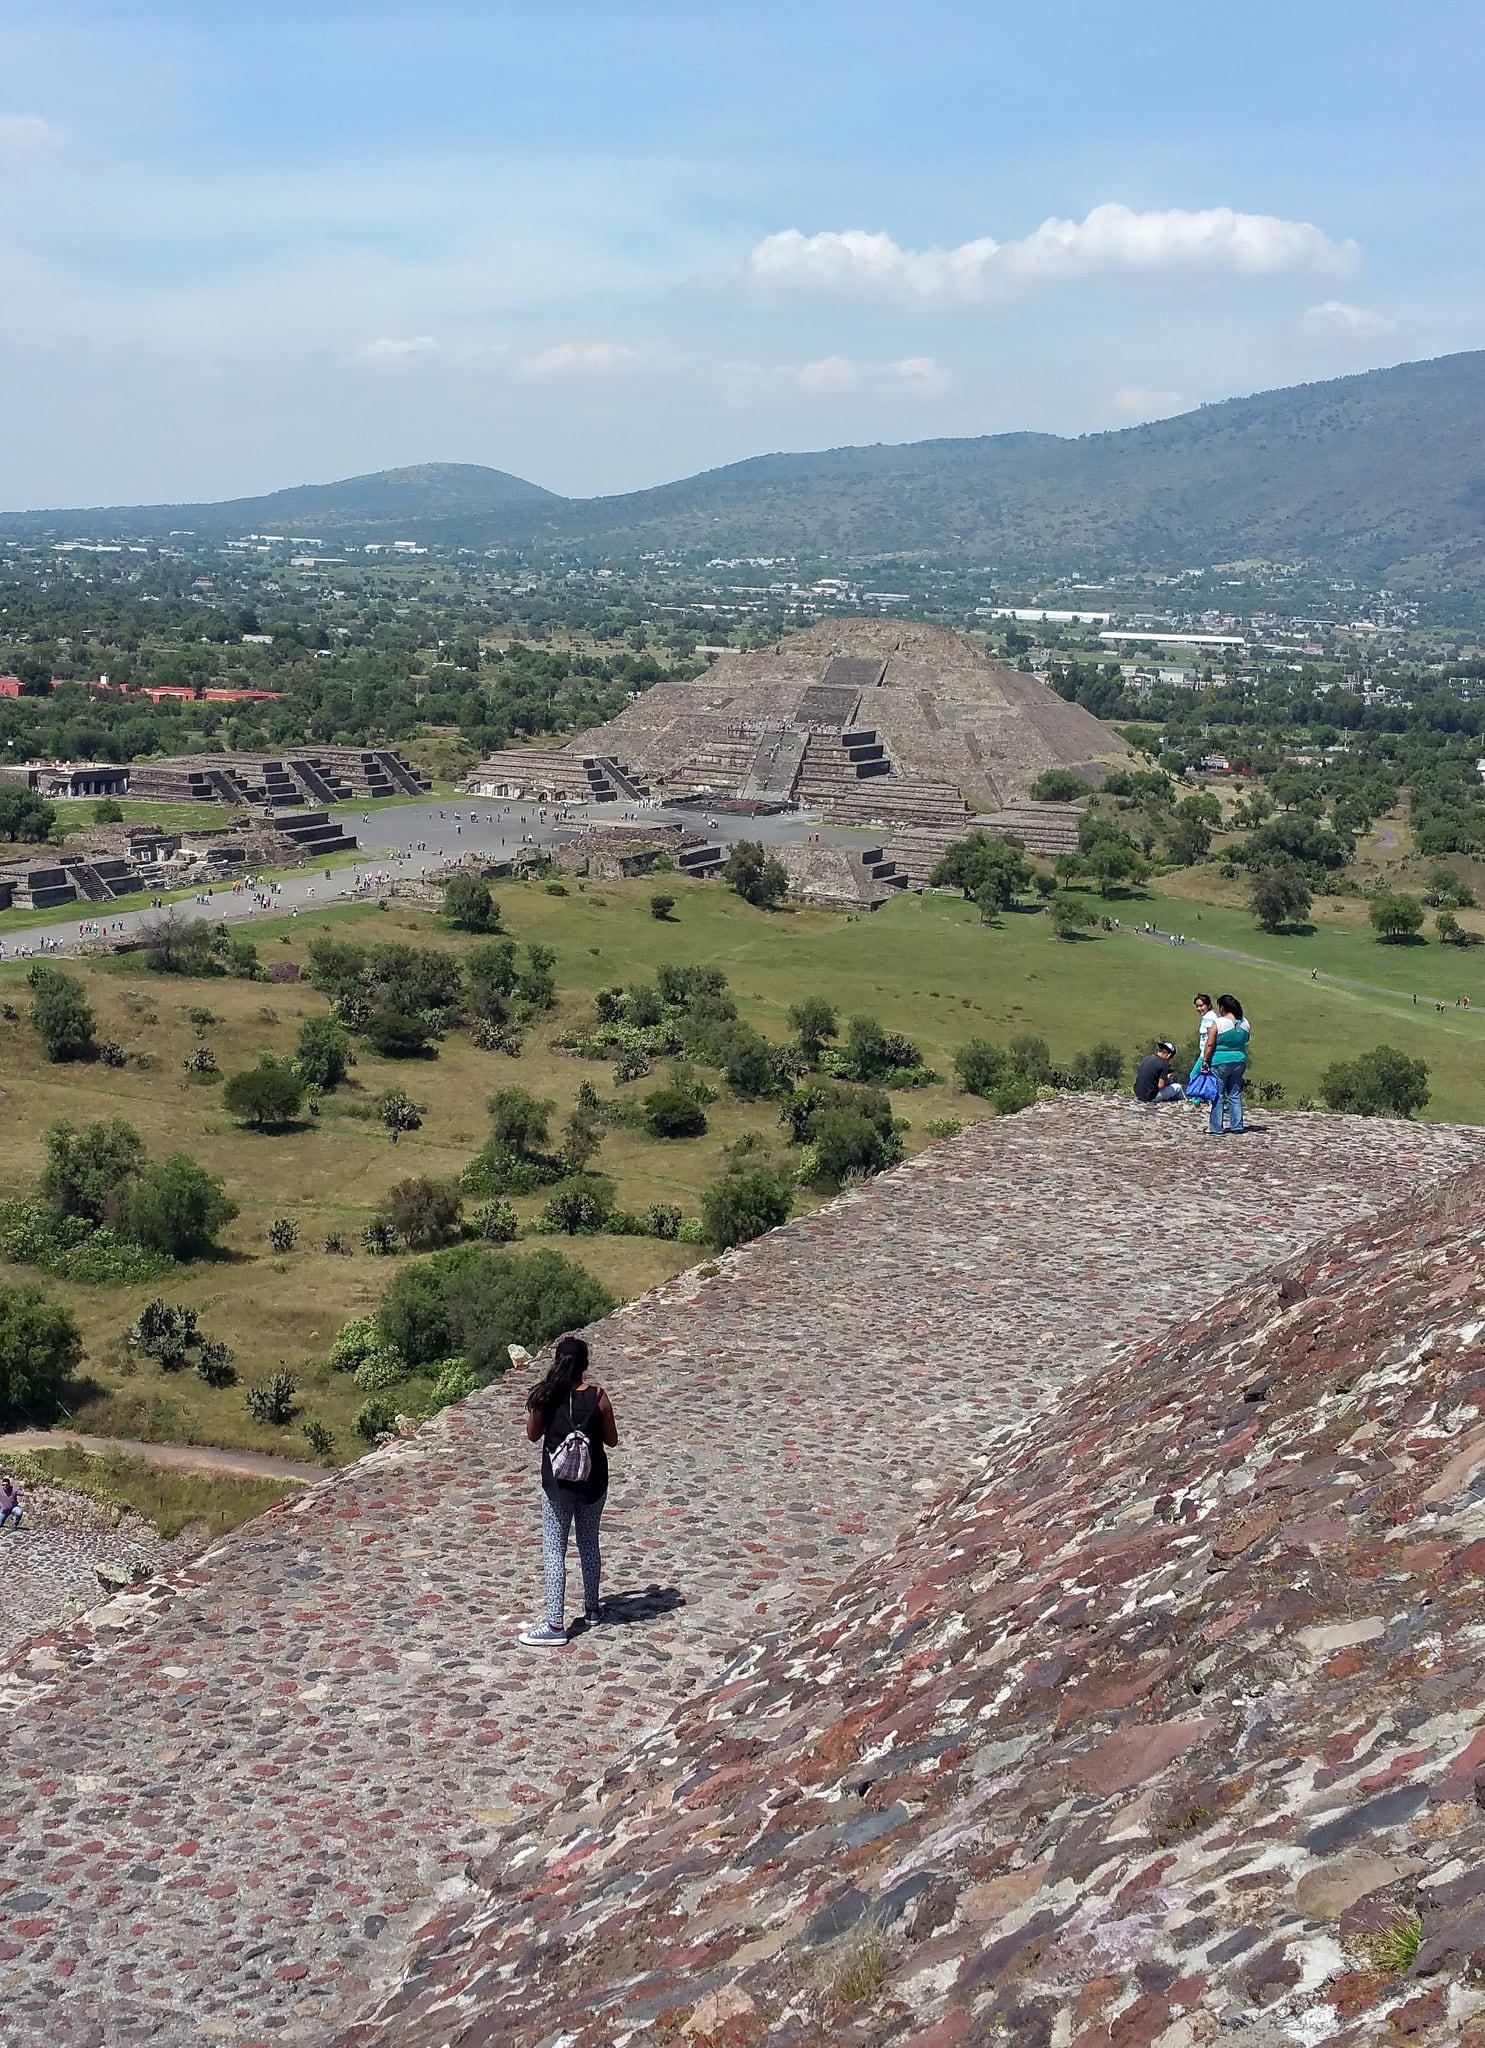 Image de Pyramide du Soleil. city mexico df quetzalcoatl pirámides piramid teotihucán